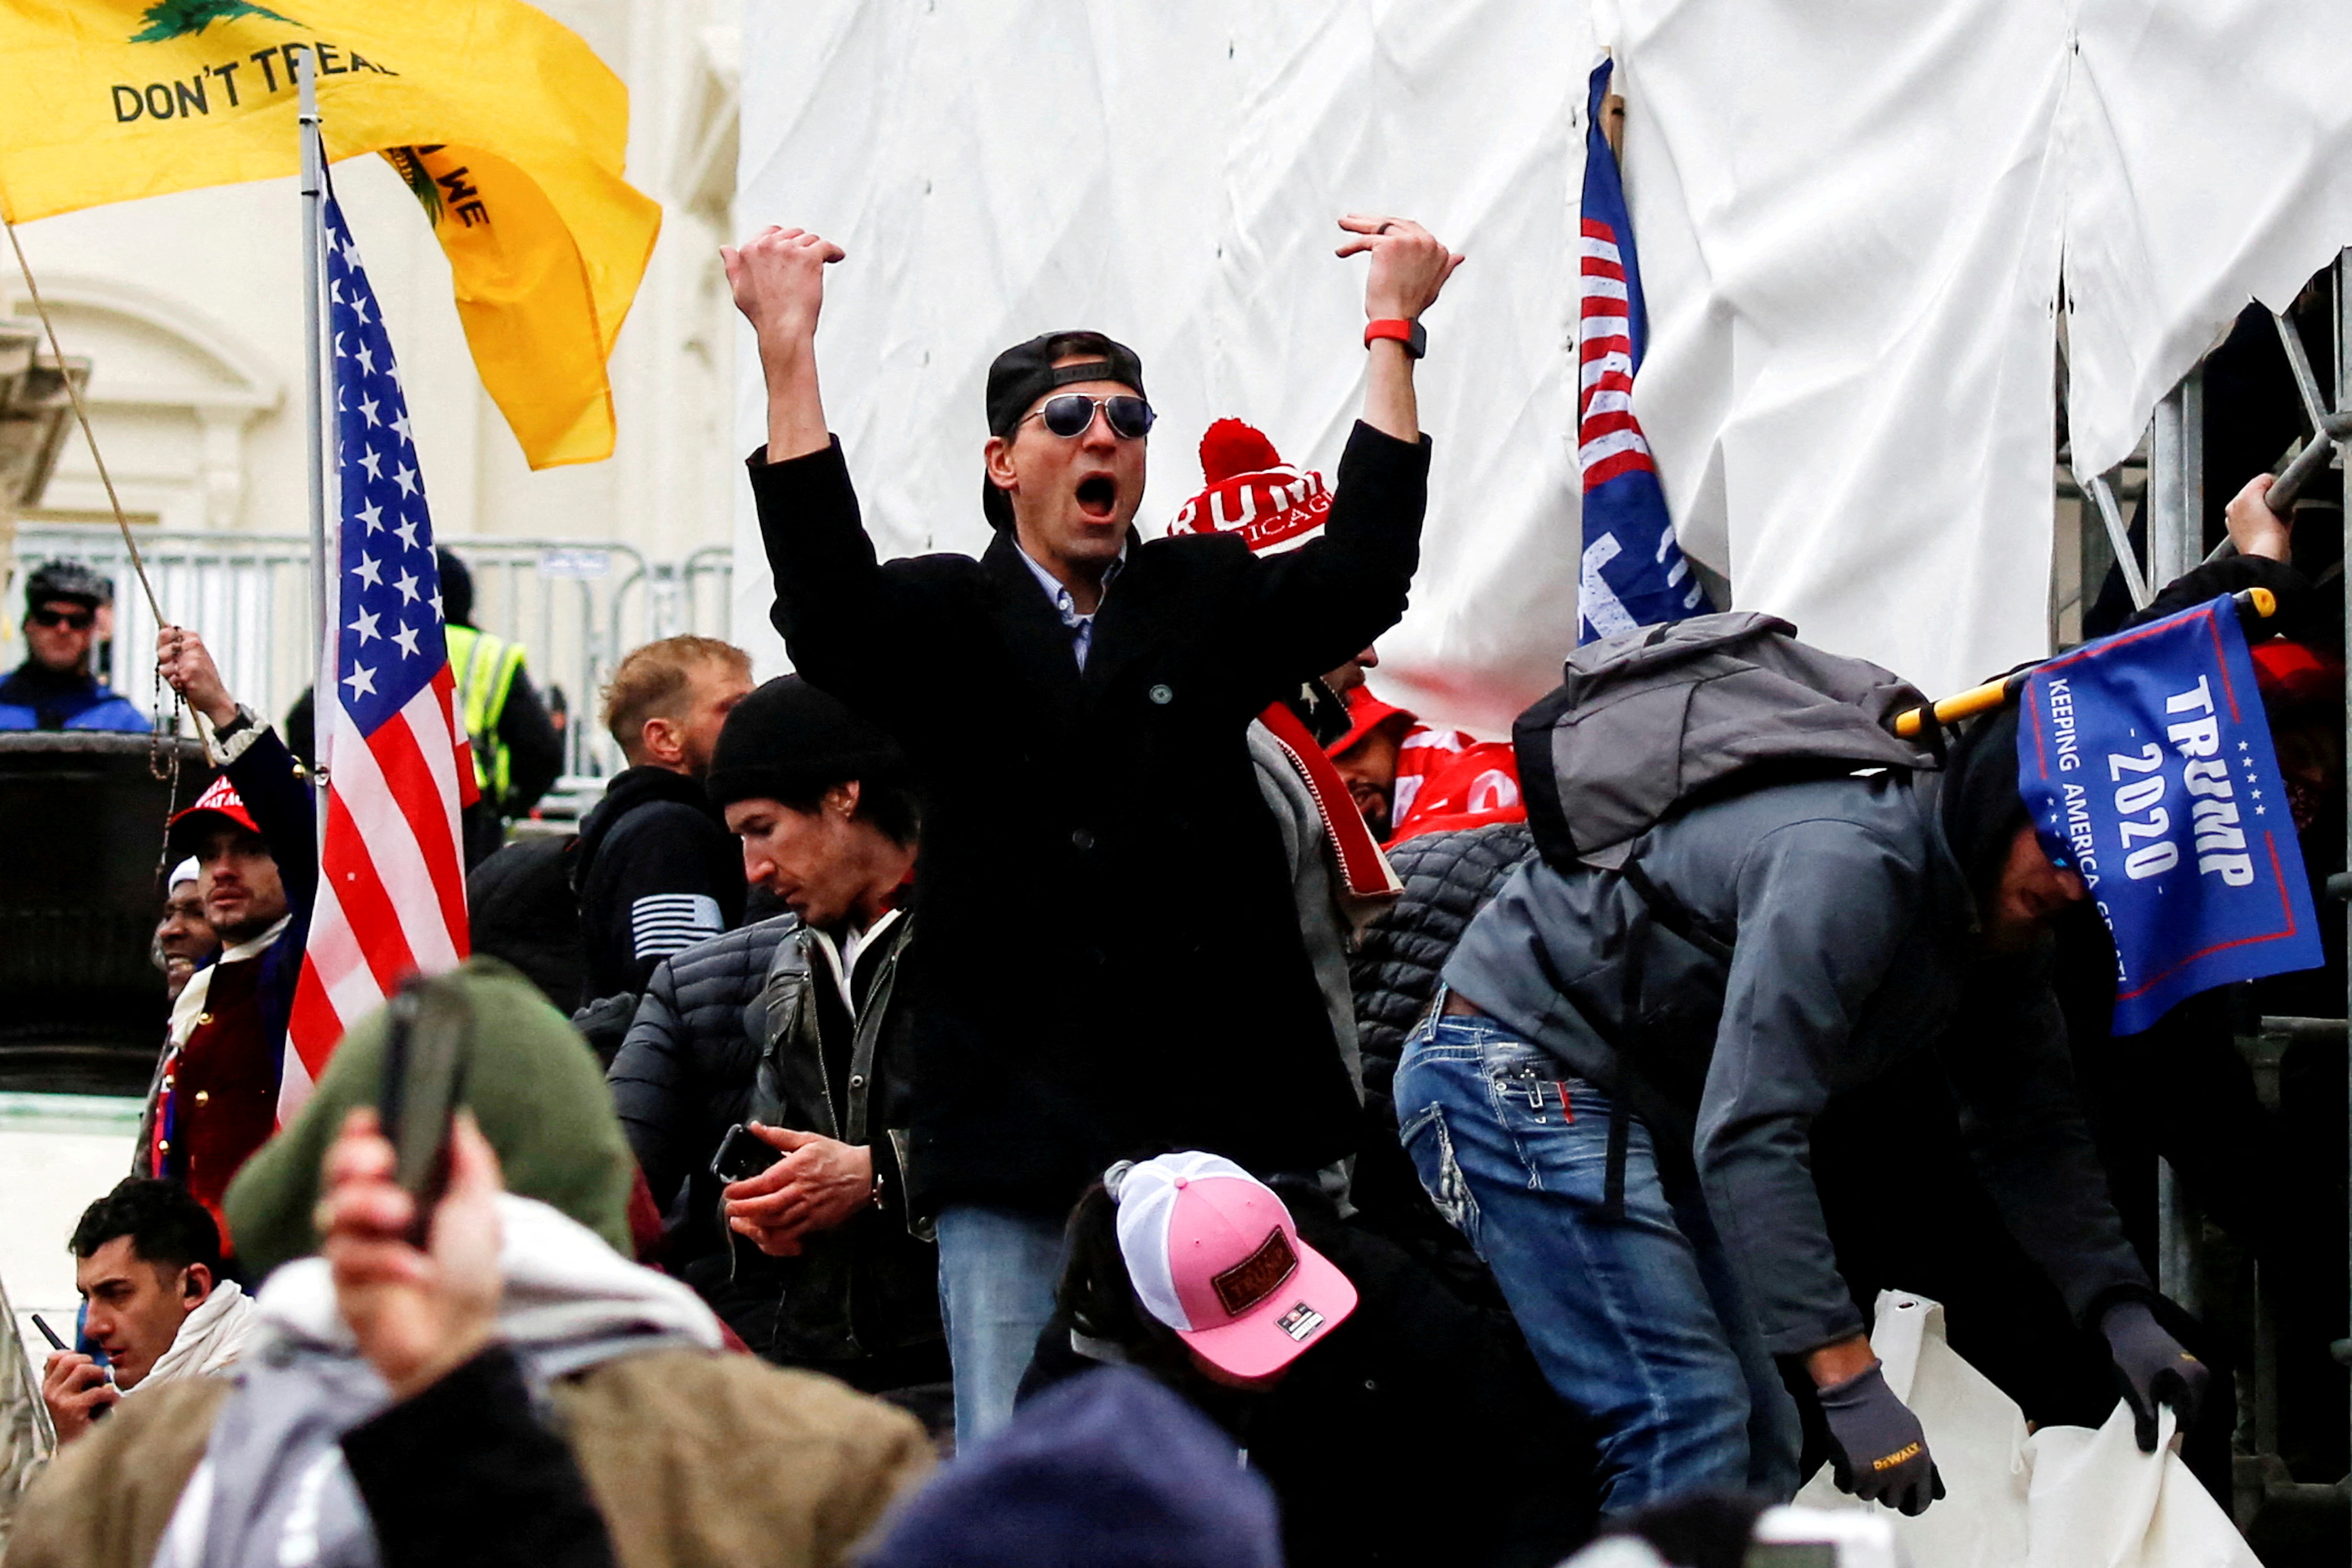 Man identified as Ryan Kelley during January 6 protest in Washington